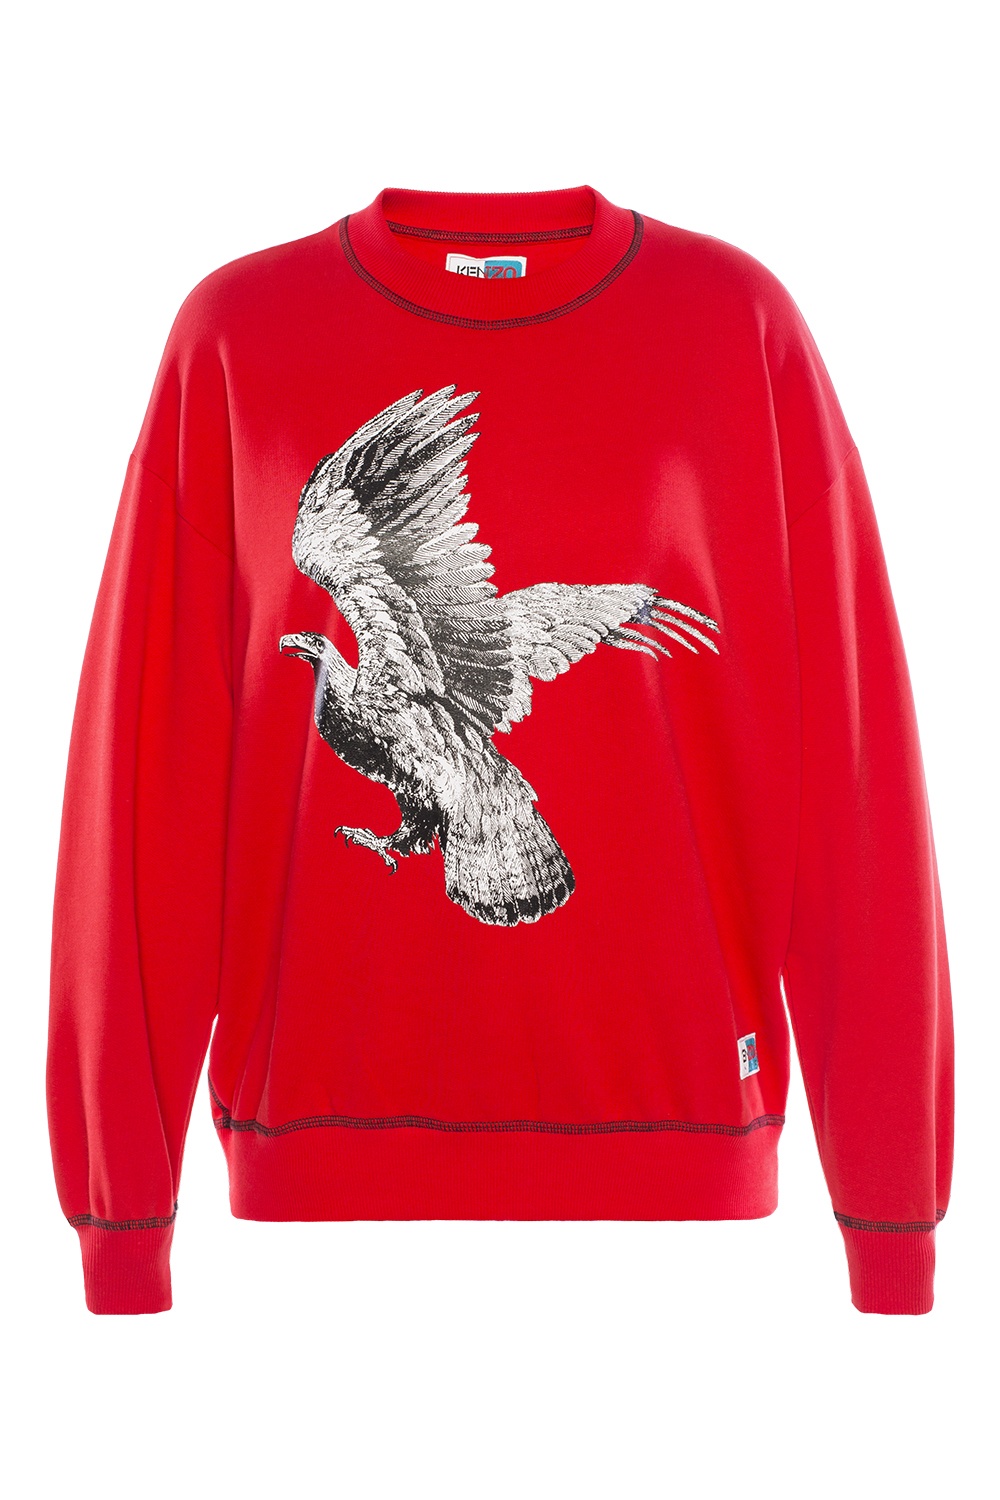 kenzo bird sweater